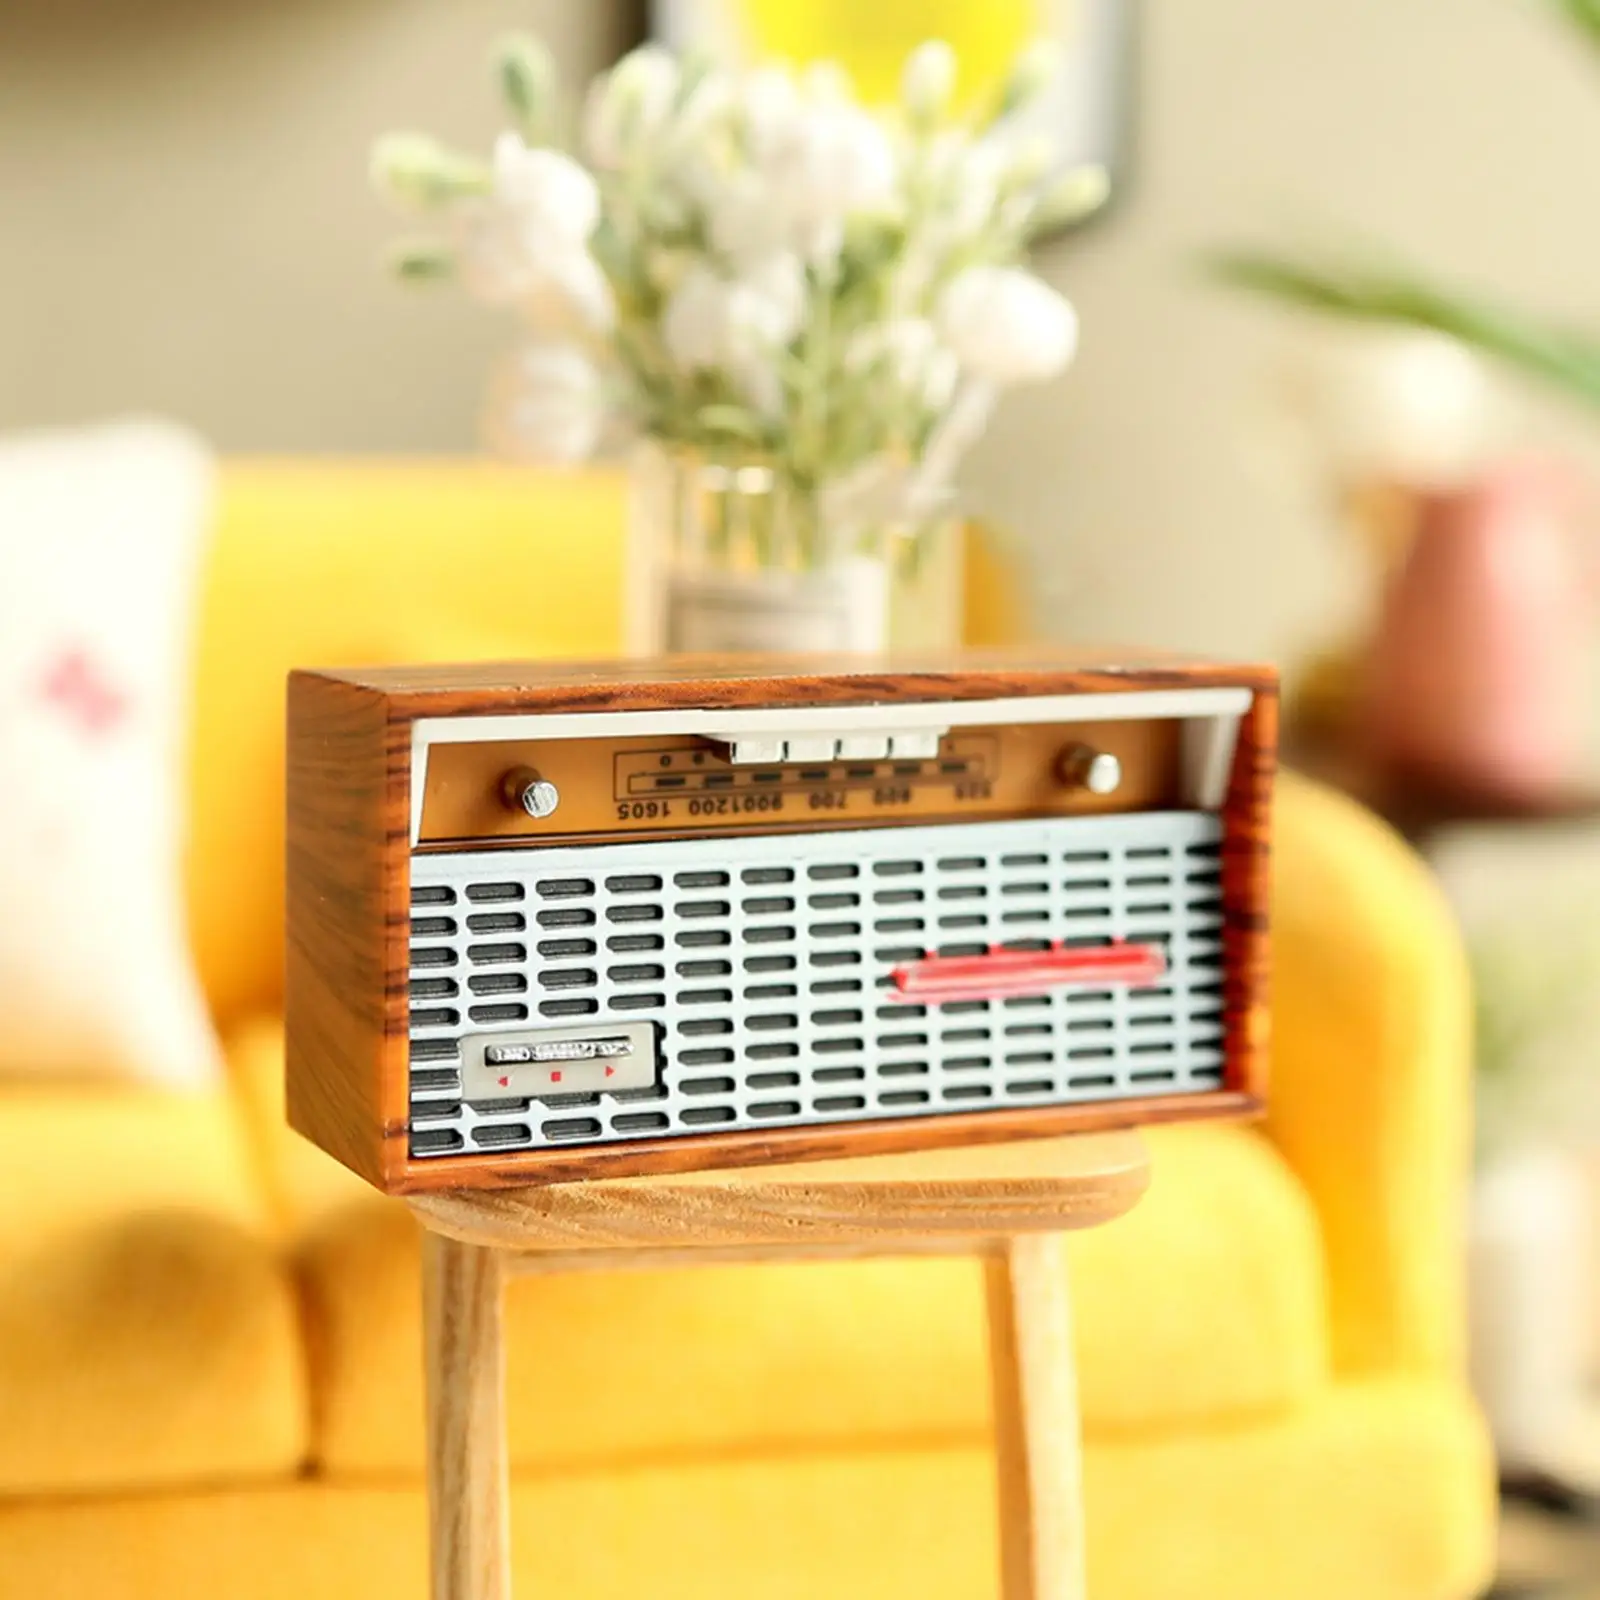 Miniature Radio Miniature Gramophone Furniture Model for 1/6 Dollhouse